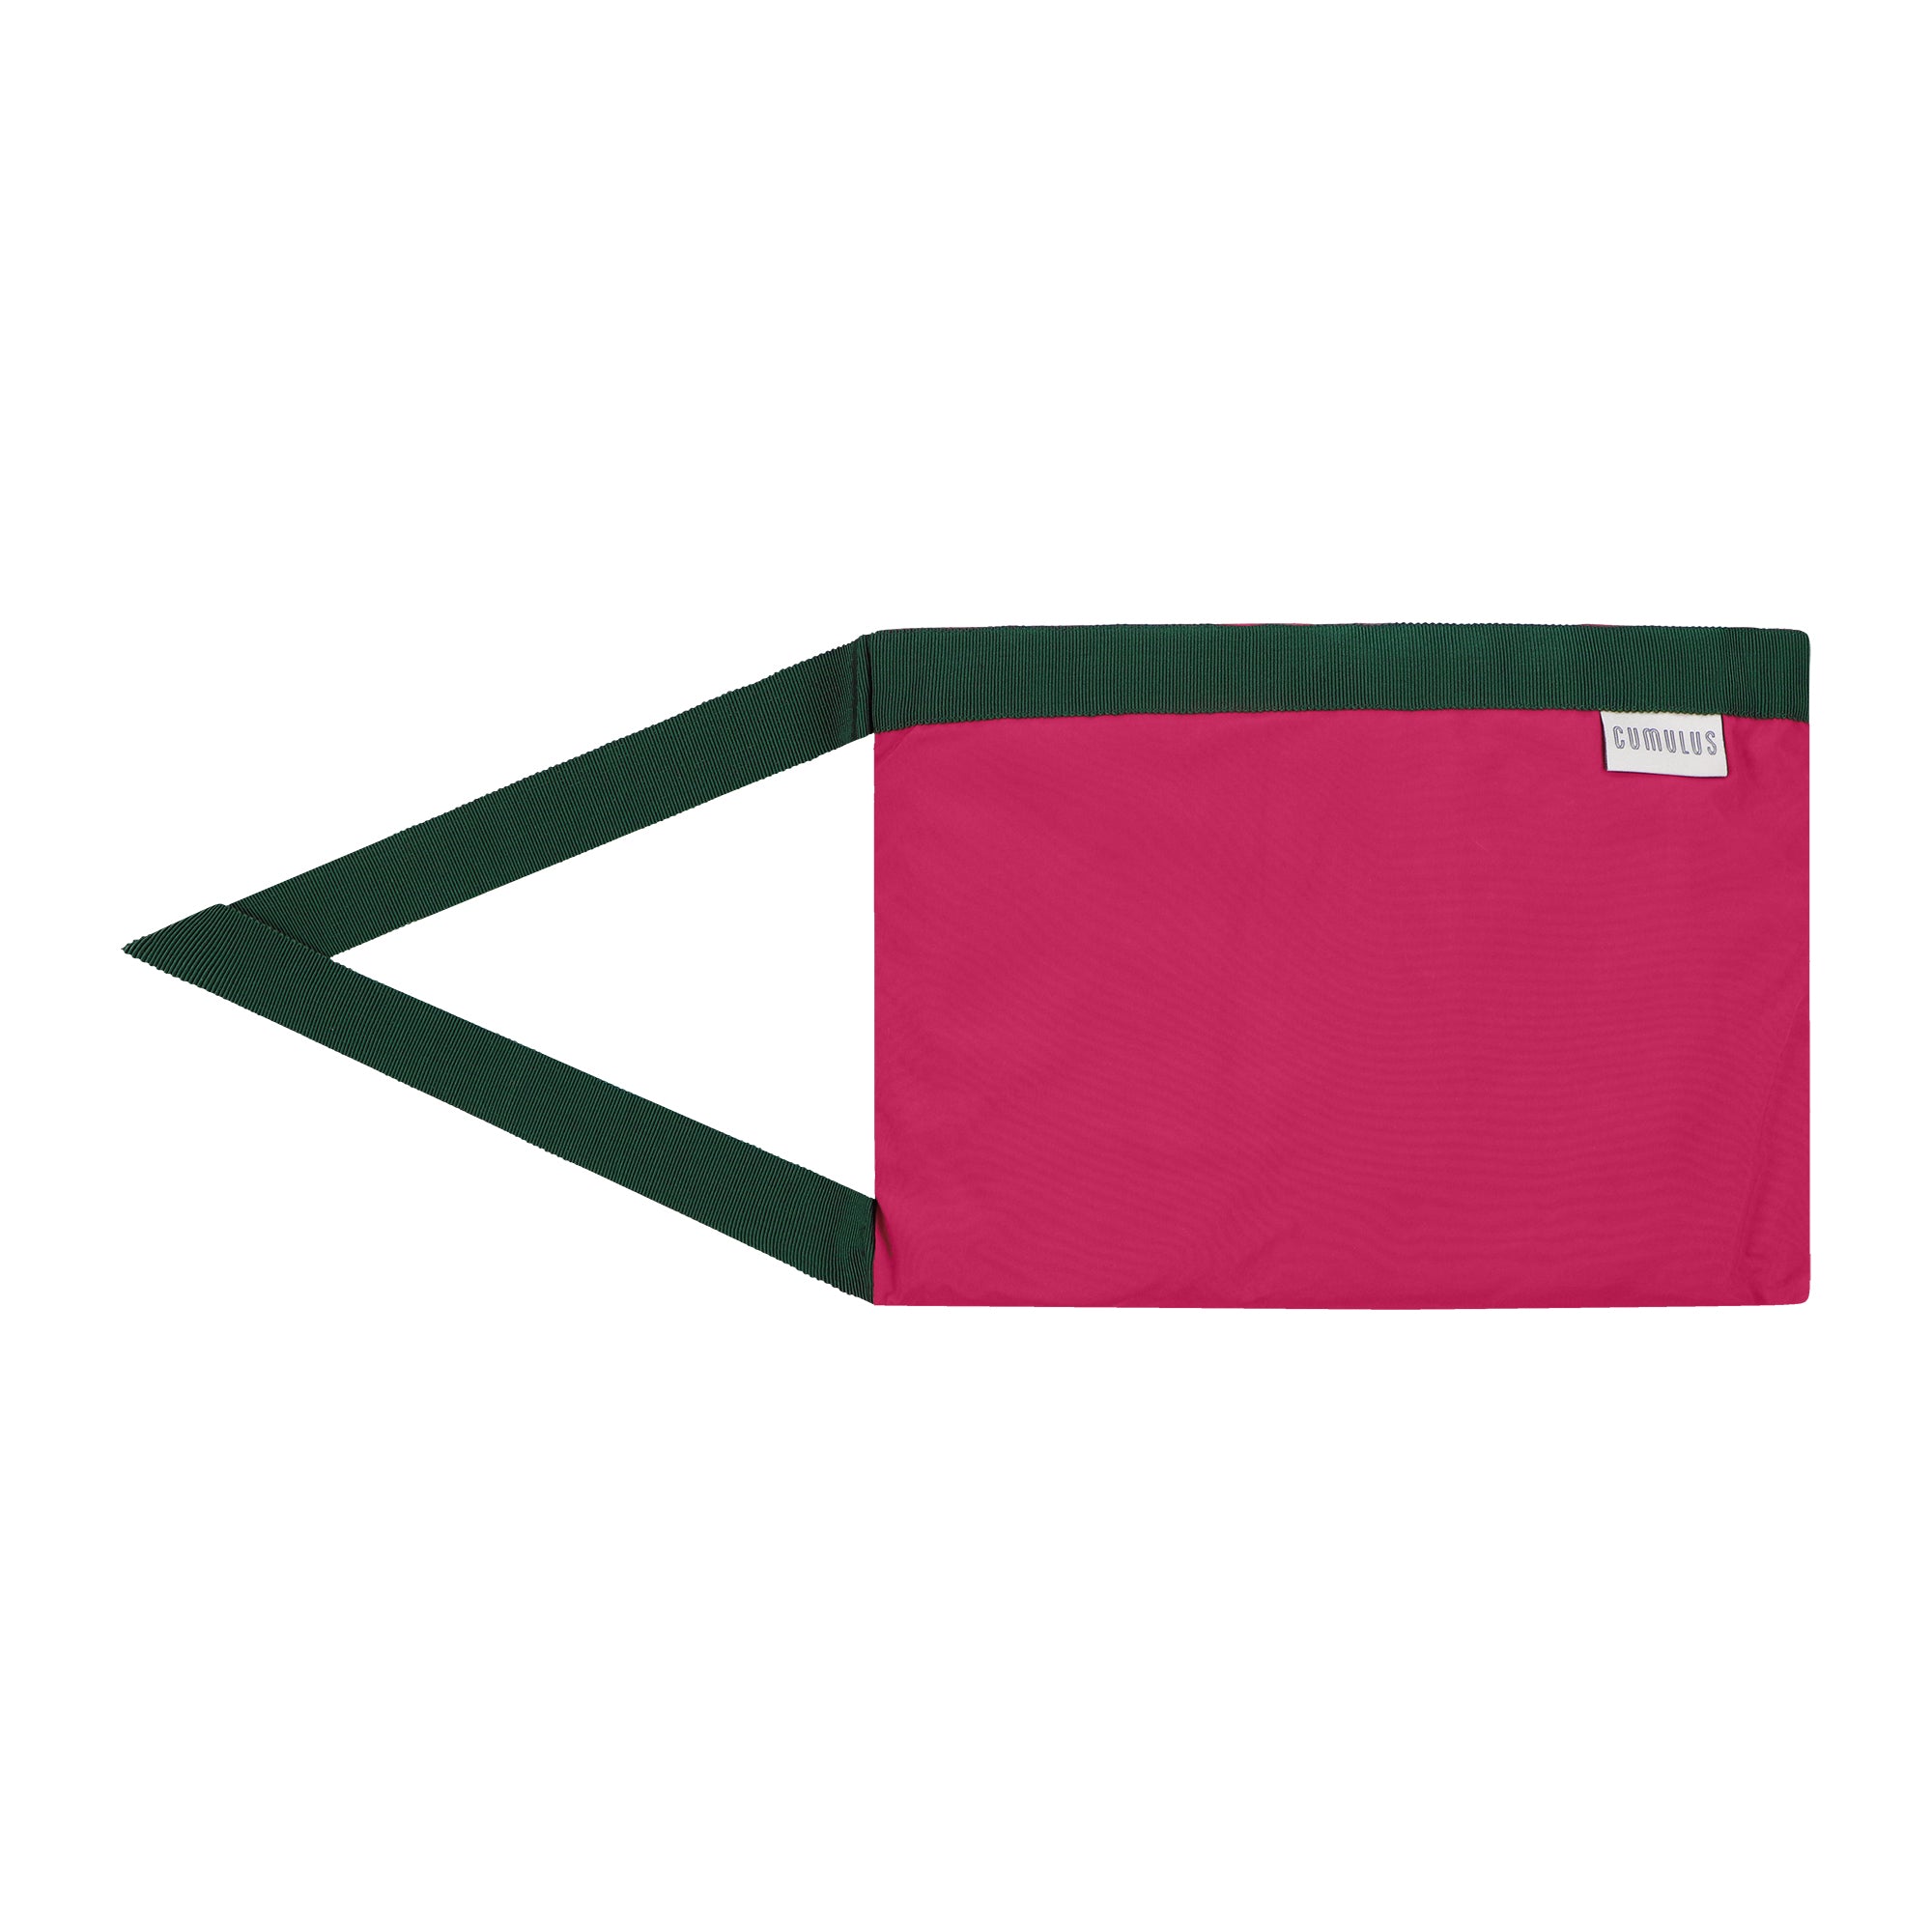 The classic raincoat - cherry color - pouch bag